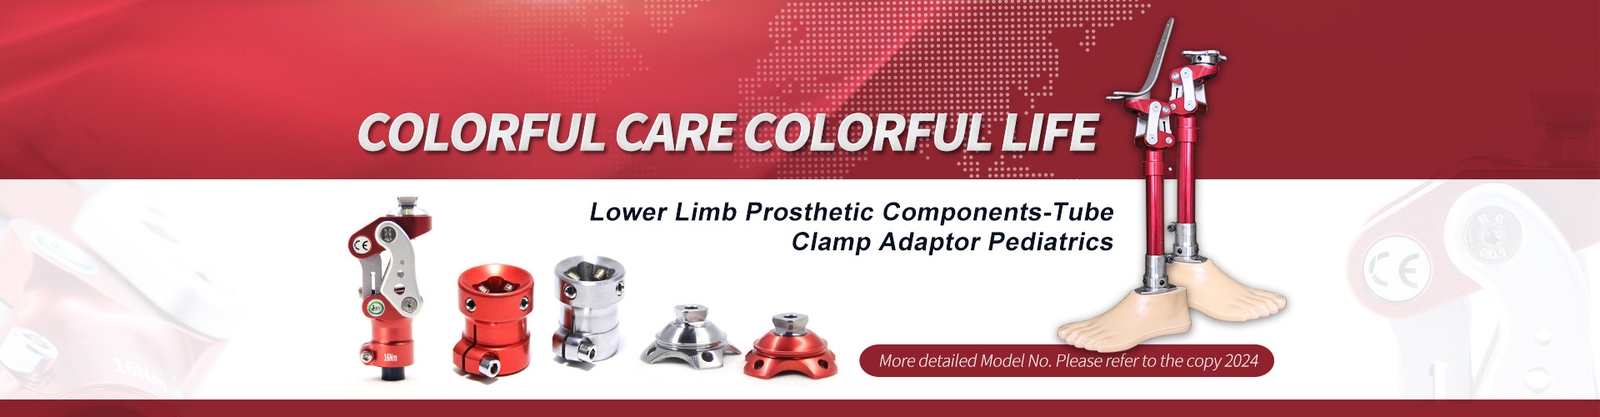 Lower Limb Prosthetic Components